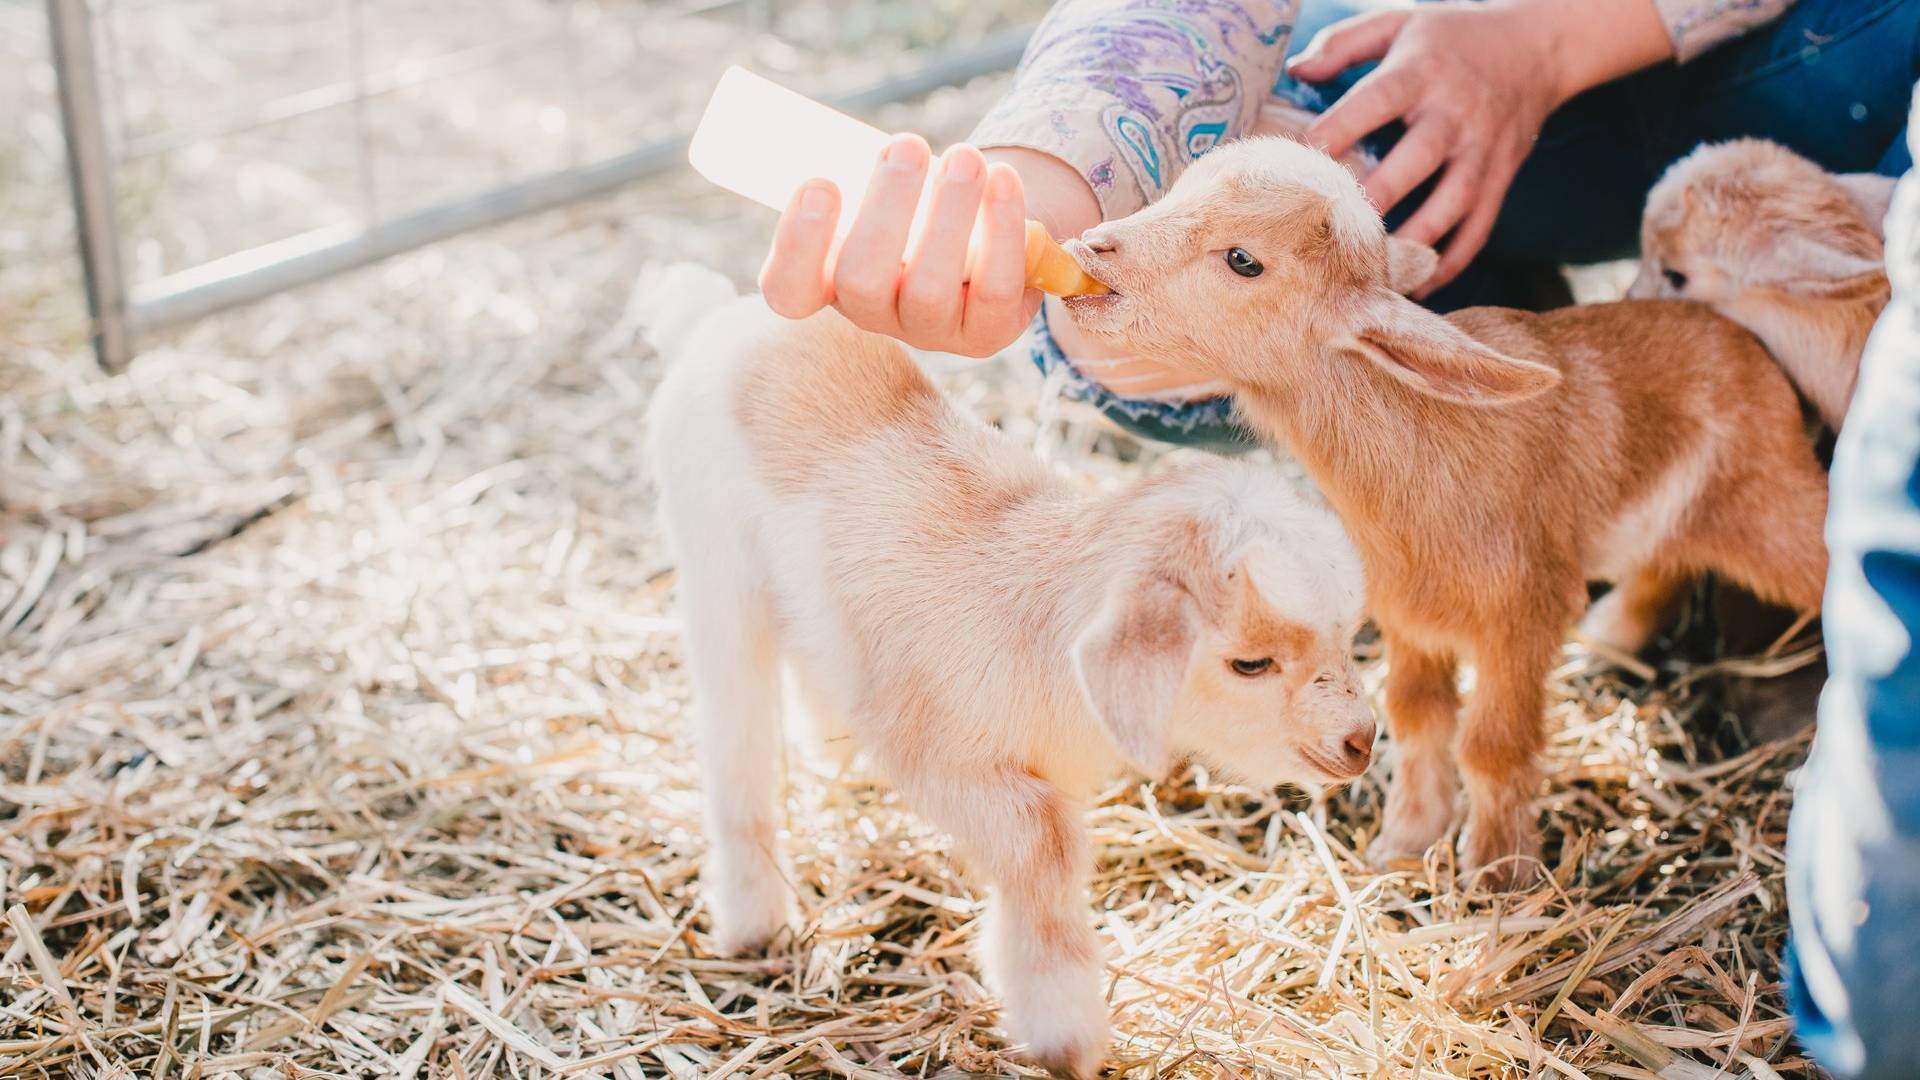 Feeding a baby goat at Splitter Farm